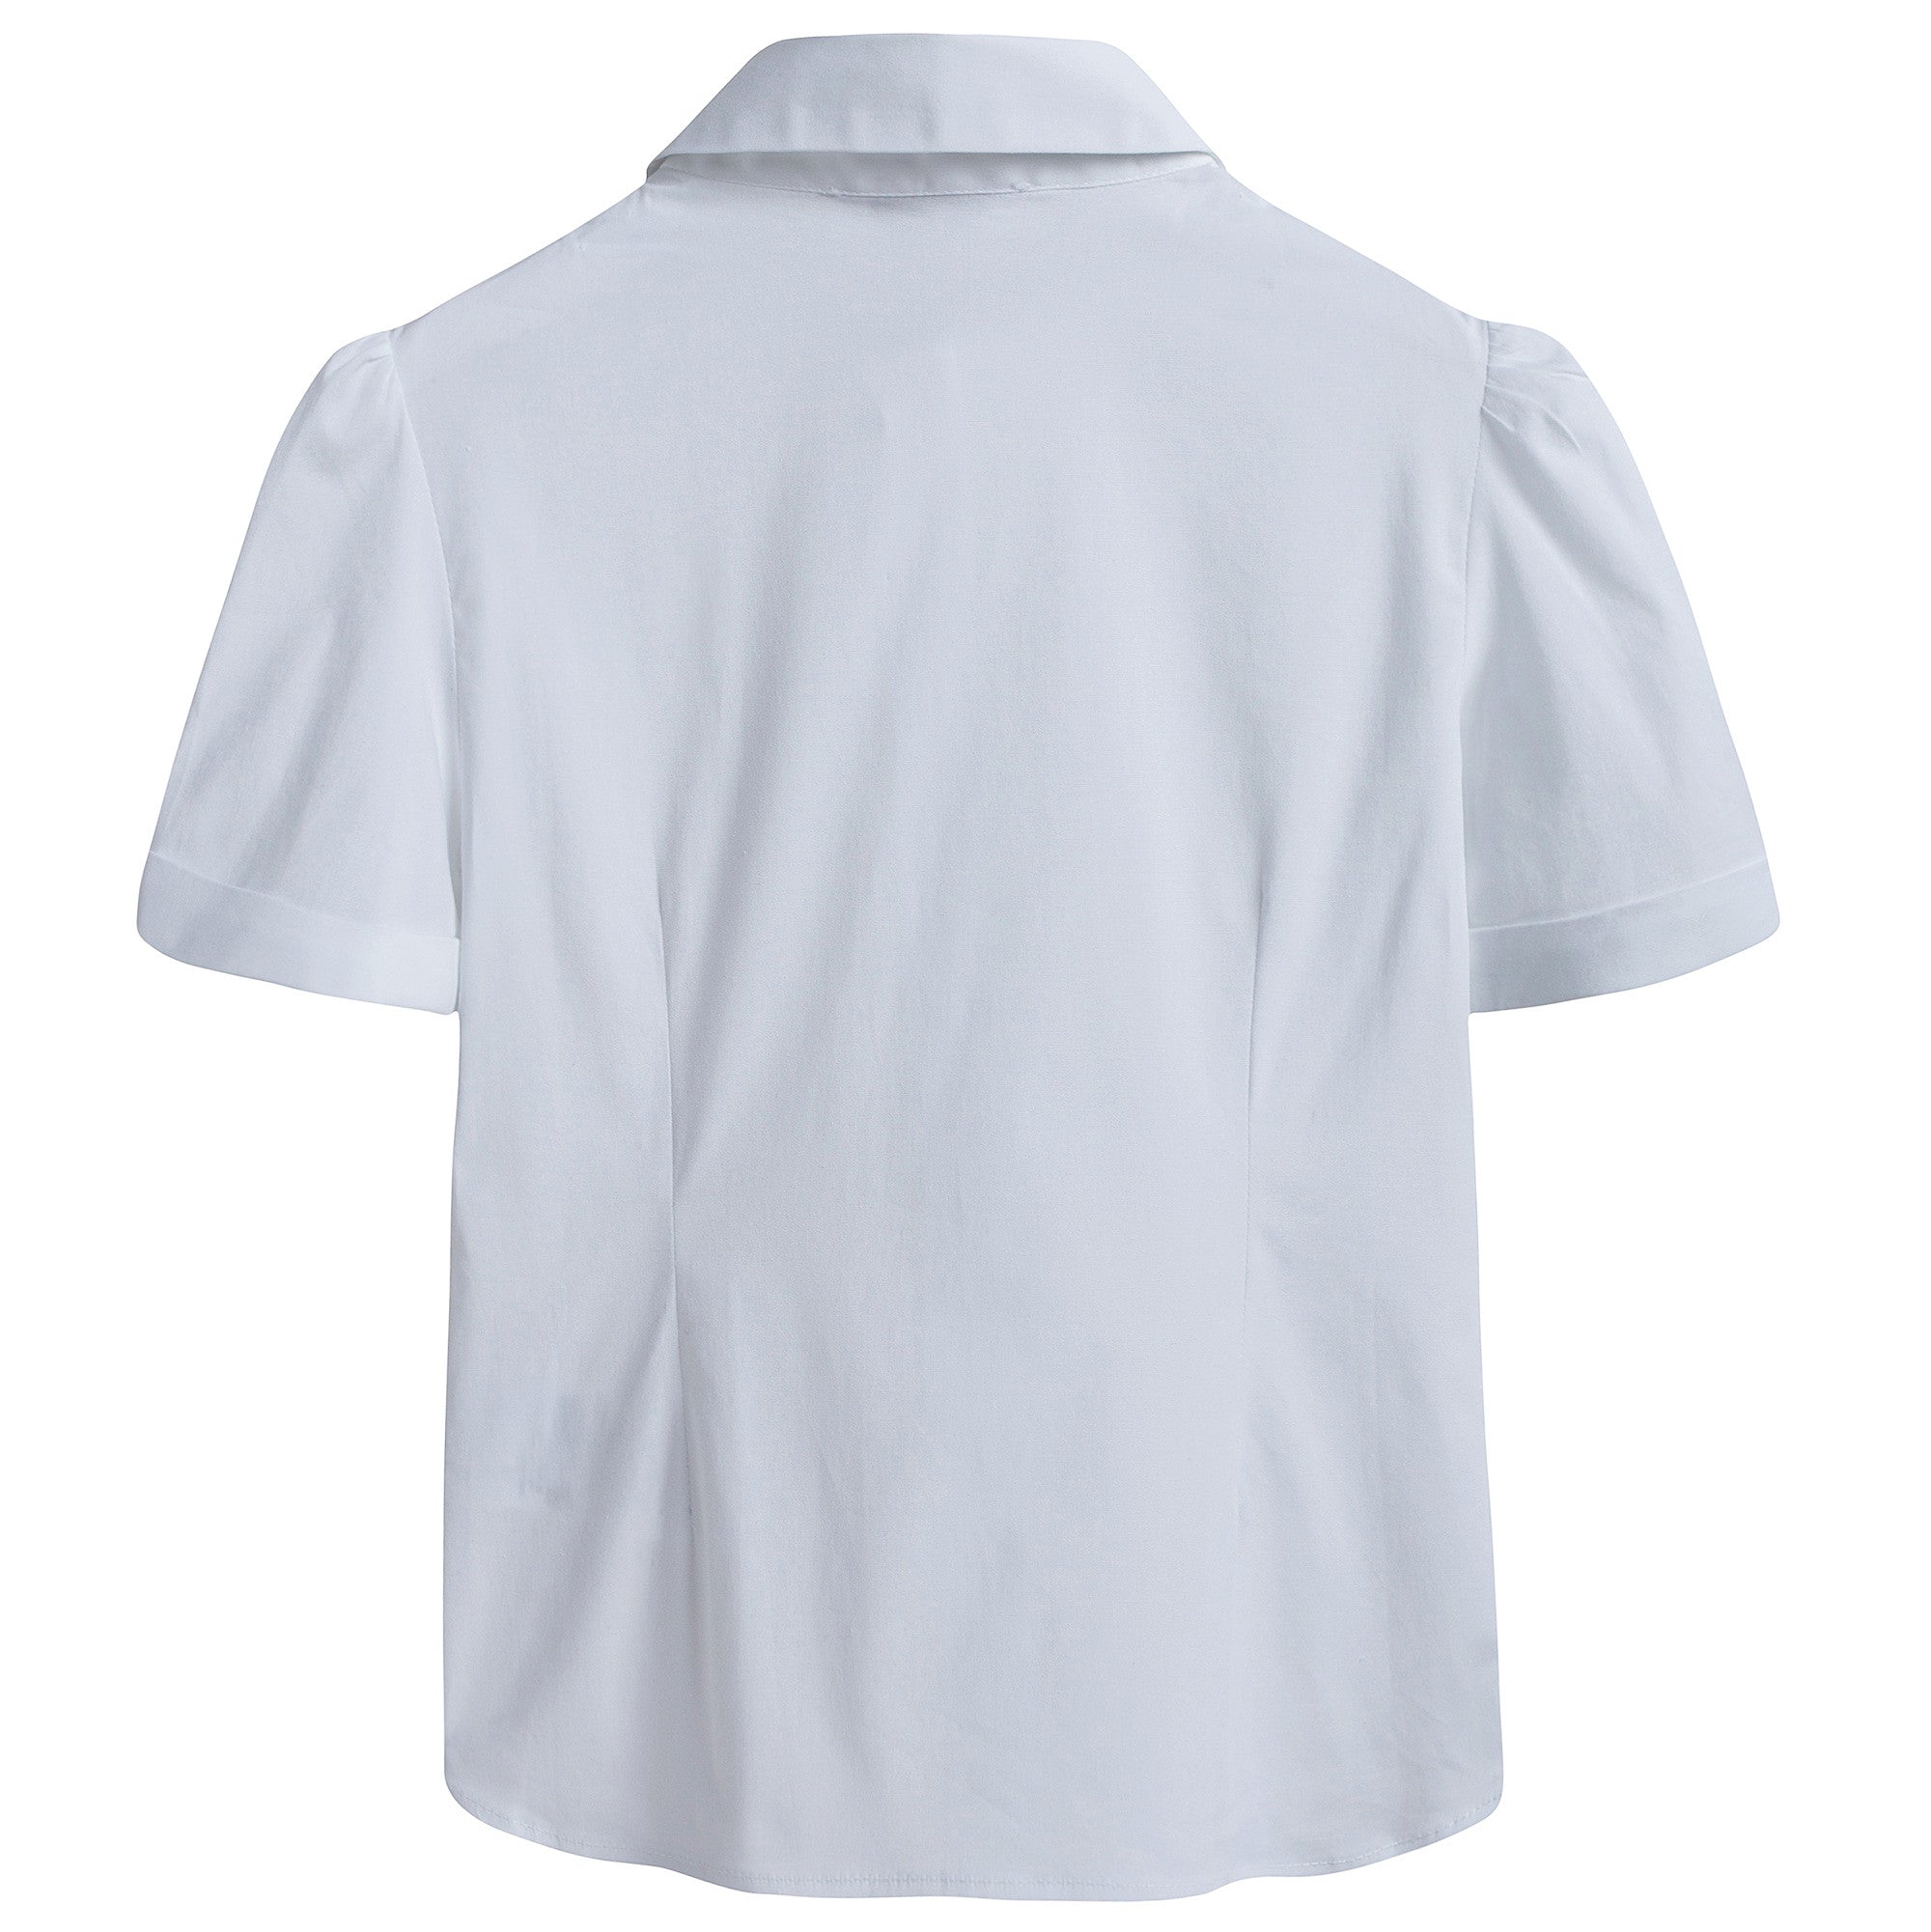 Girls White Cotton Shirt With Heart Trim